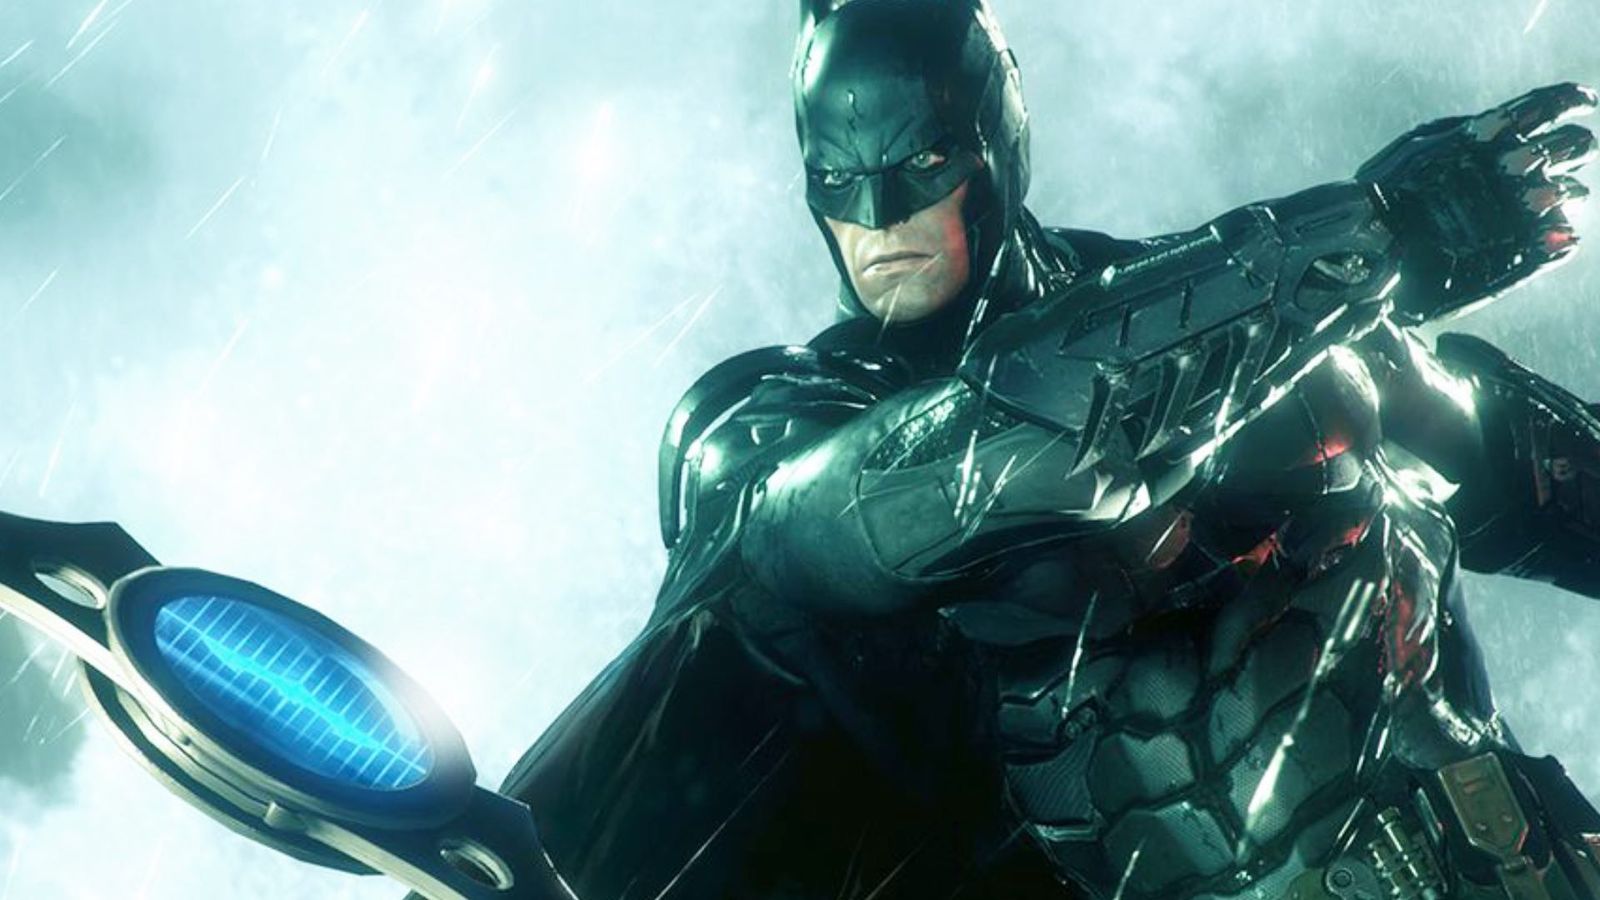 Batman throwing a Batarang in Batman: Arkham Knight 